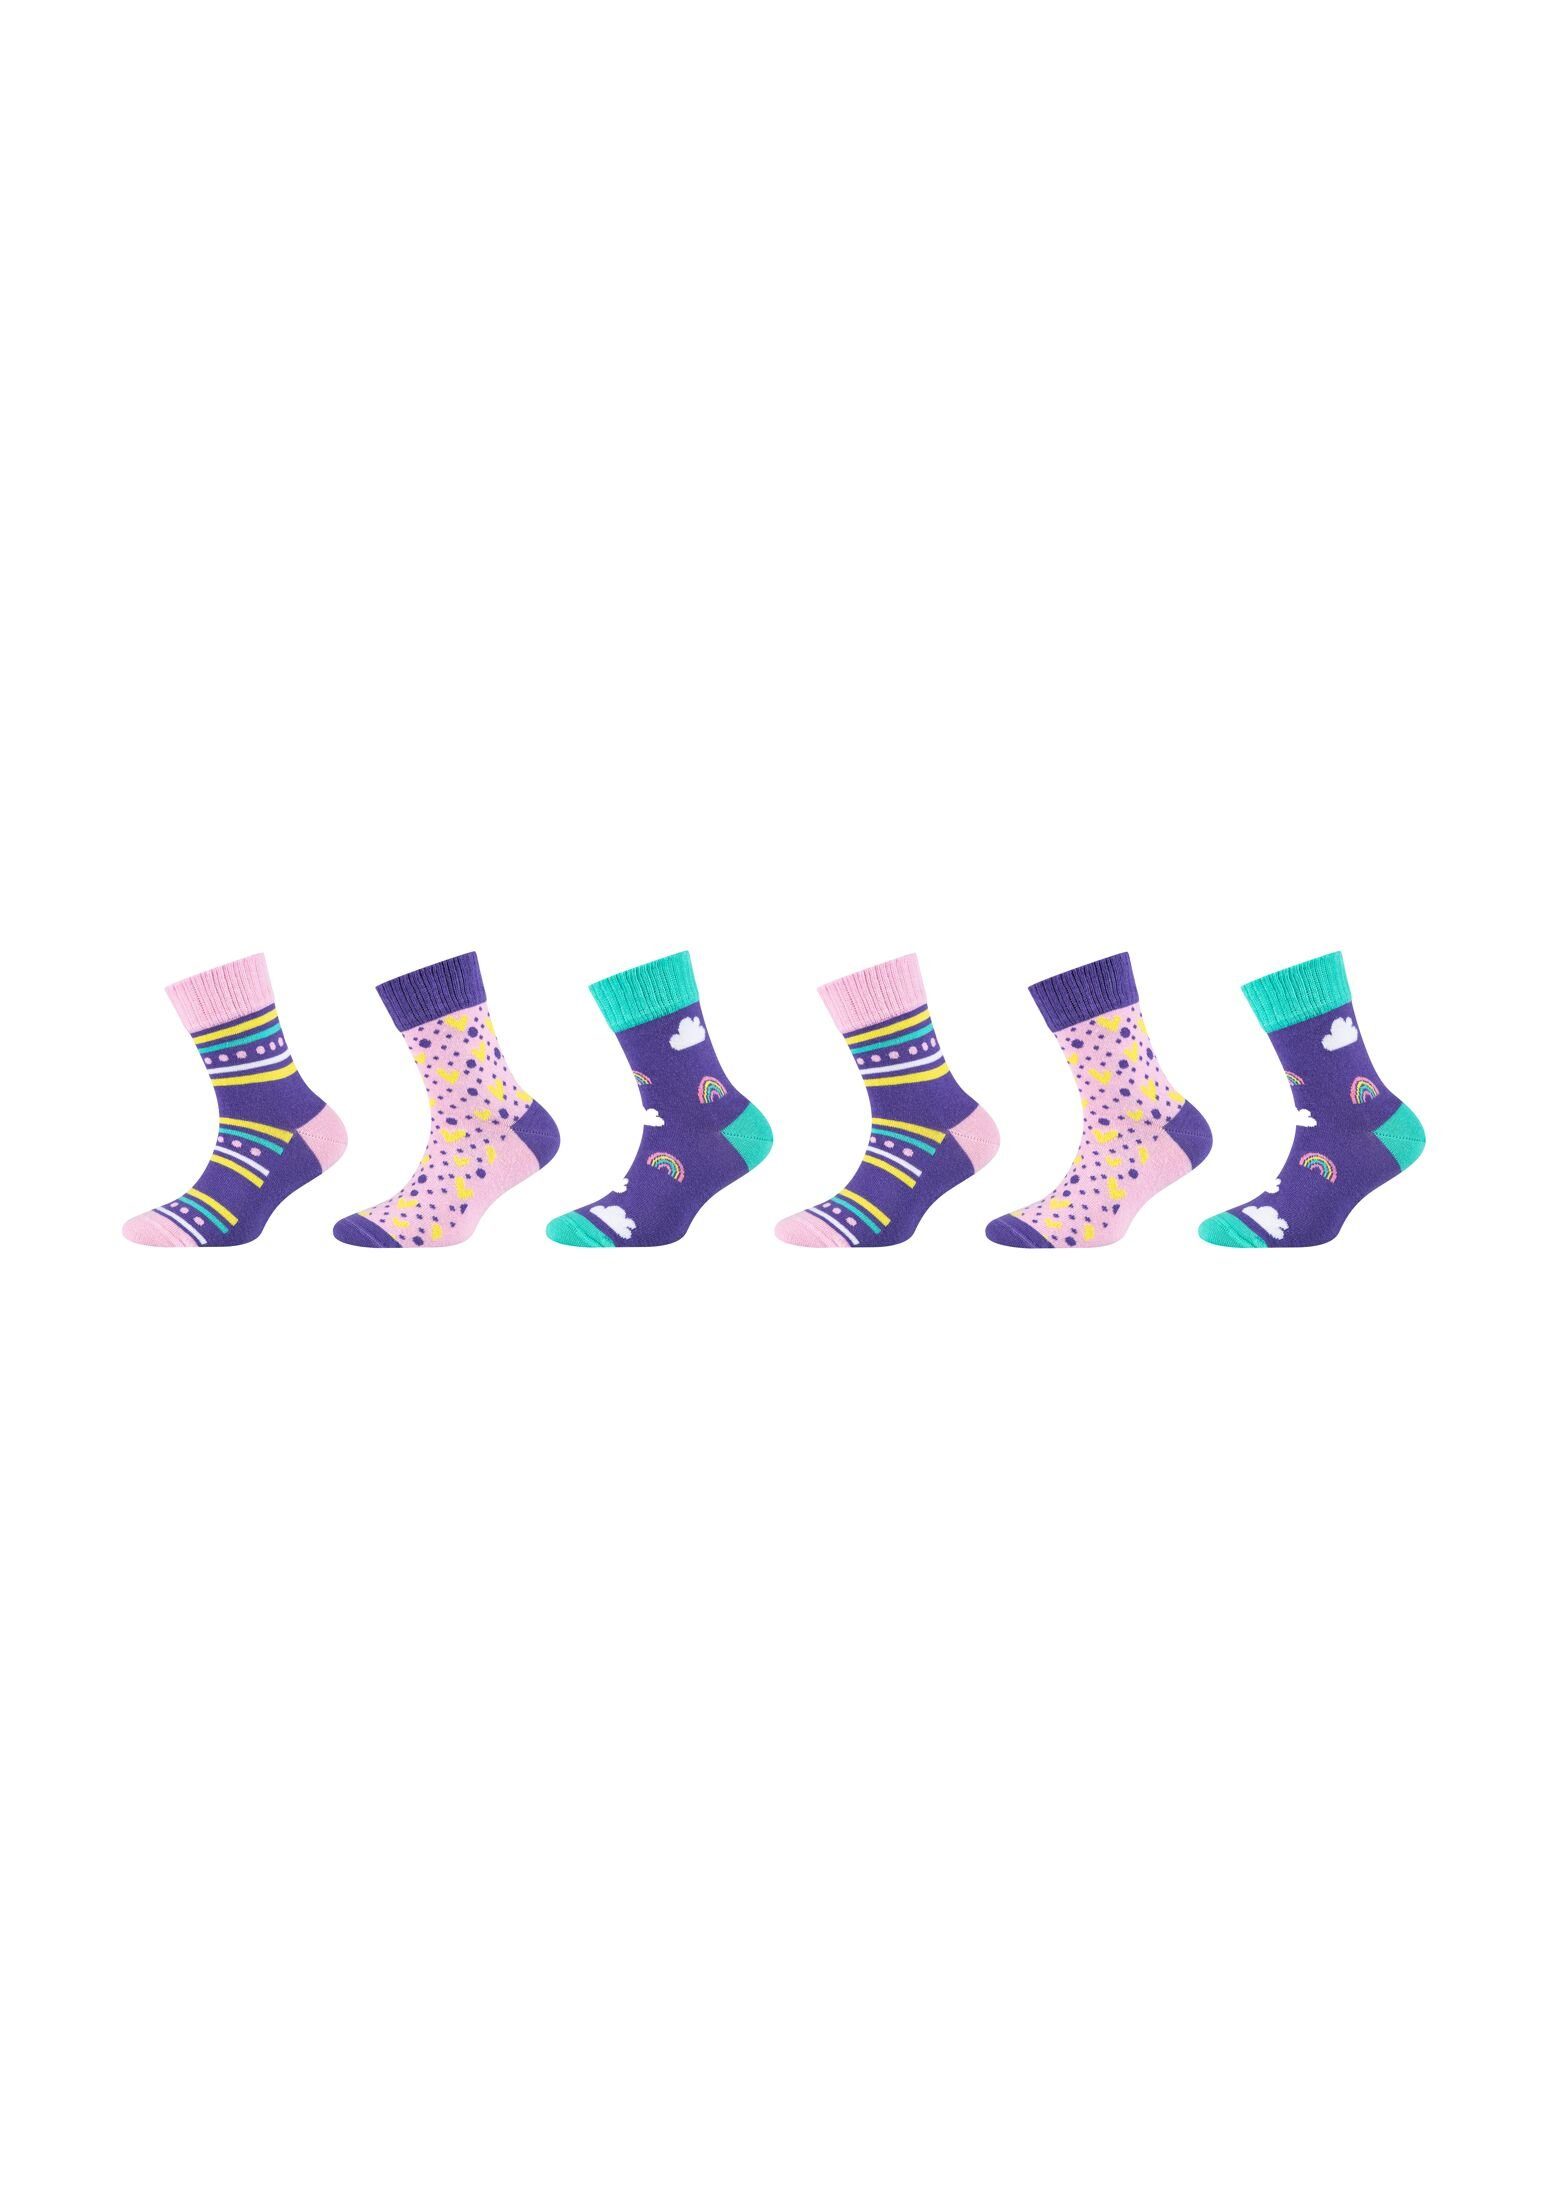 Skechers Socken Socken 6er Pack, Optimale Passform: perfekter Sitz ohne  Verrutschen